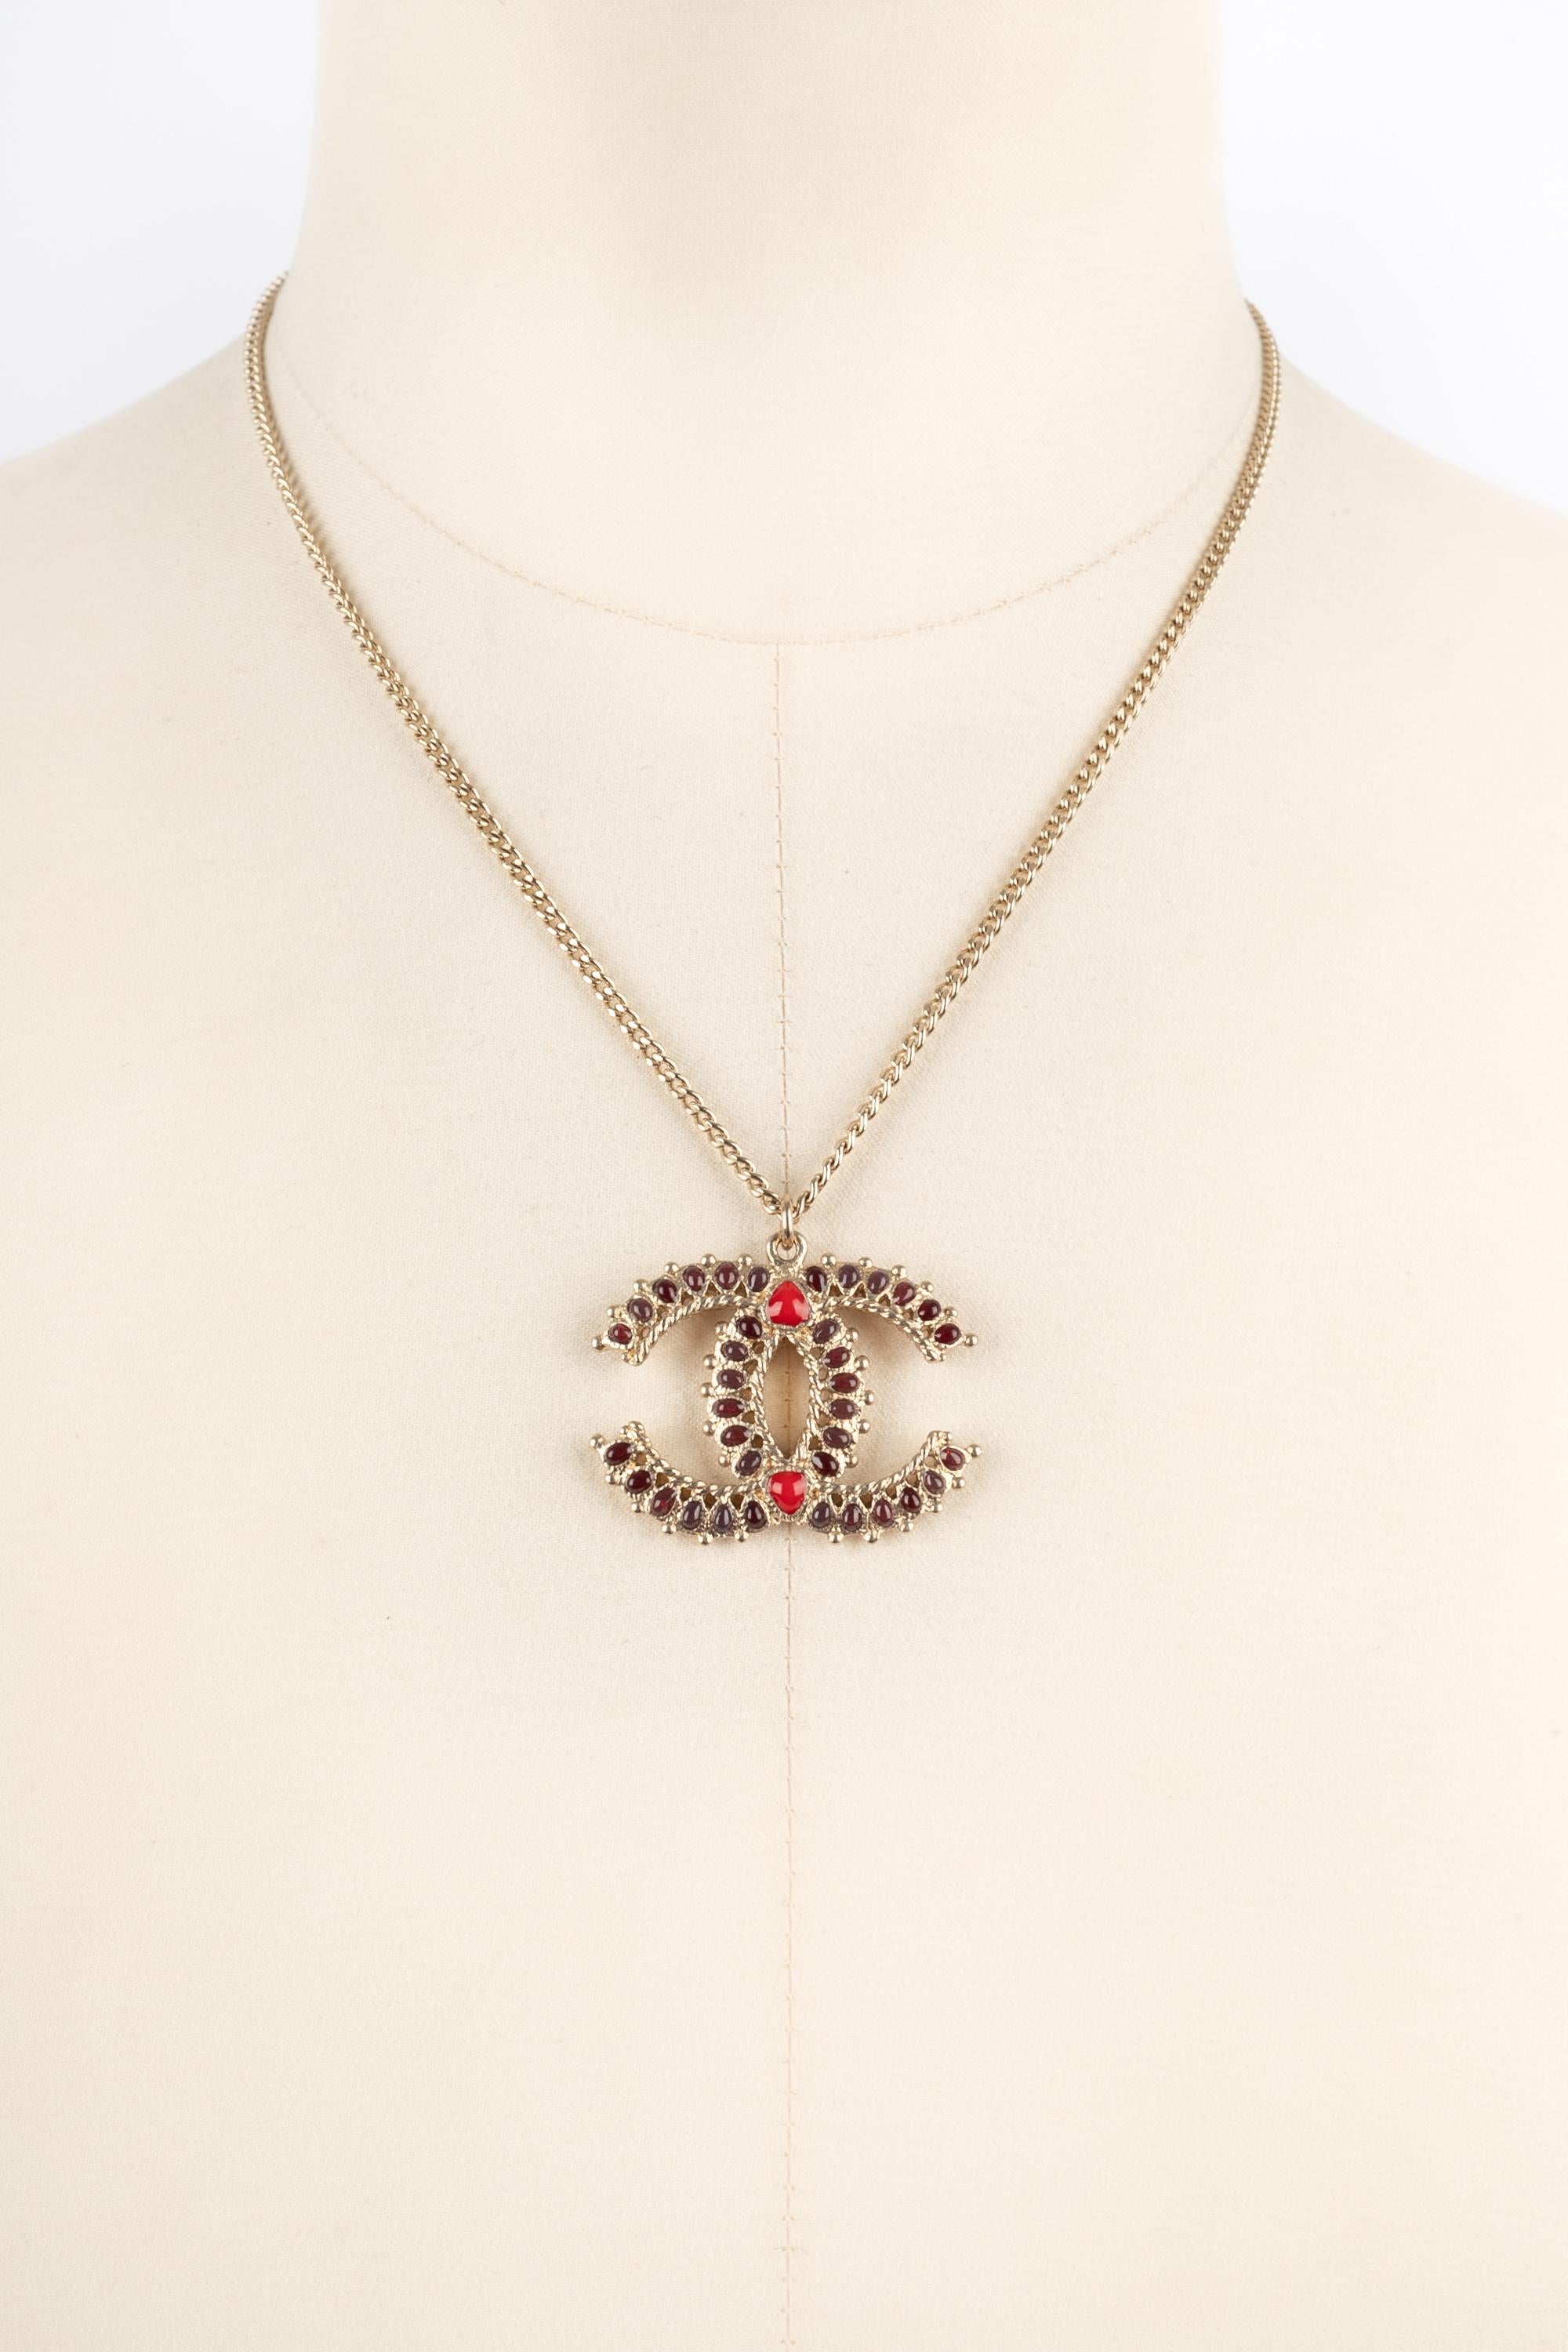 Chanel cc necklace 2014 3